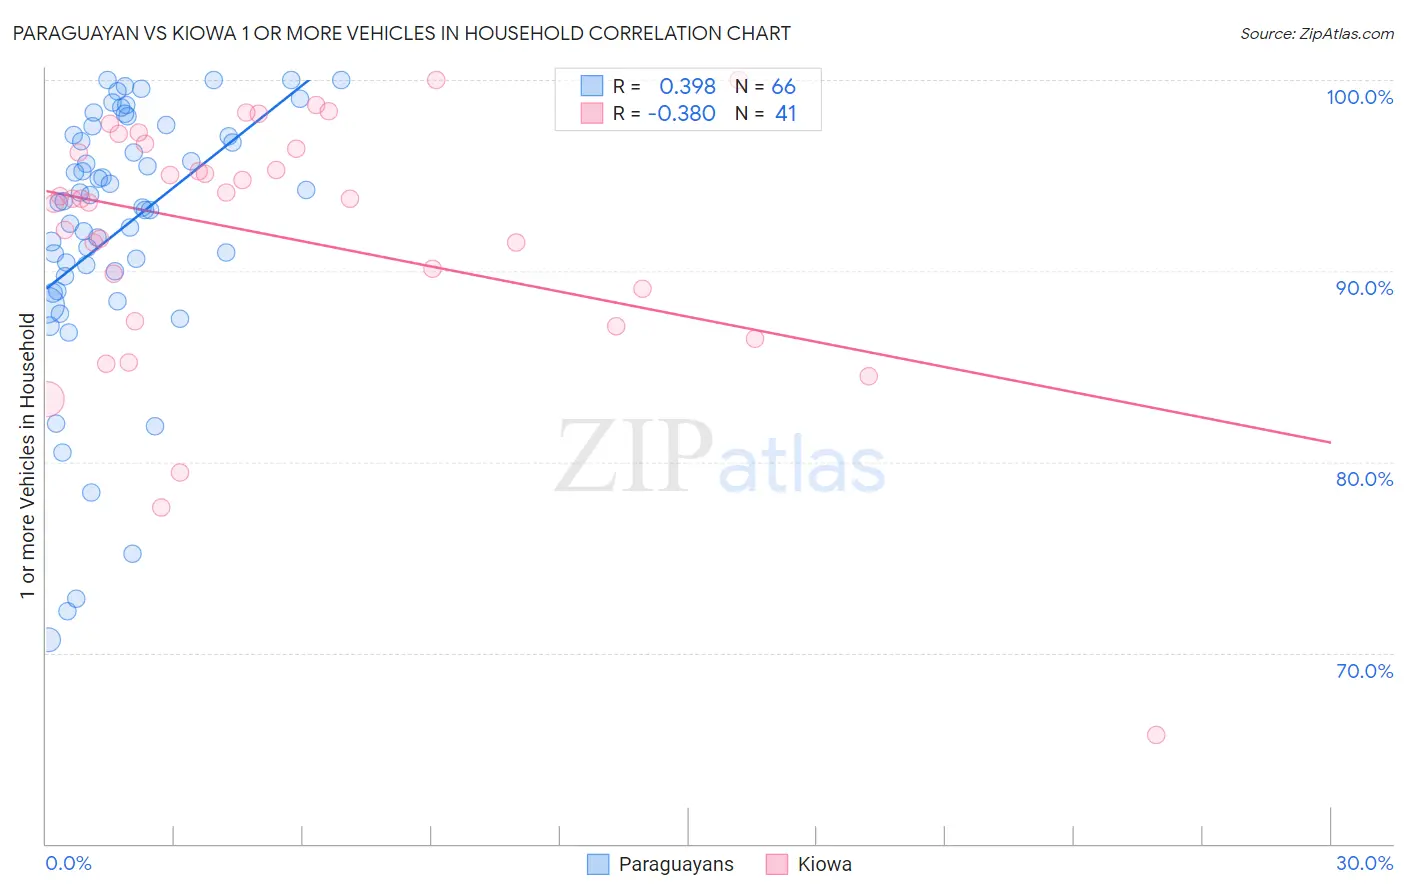 Paraguayan vs Kiowa 1 or more Vehicles in Household